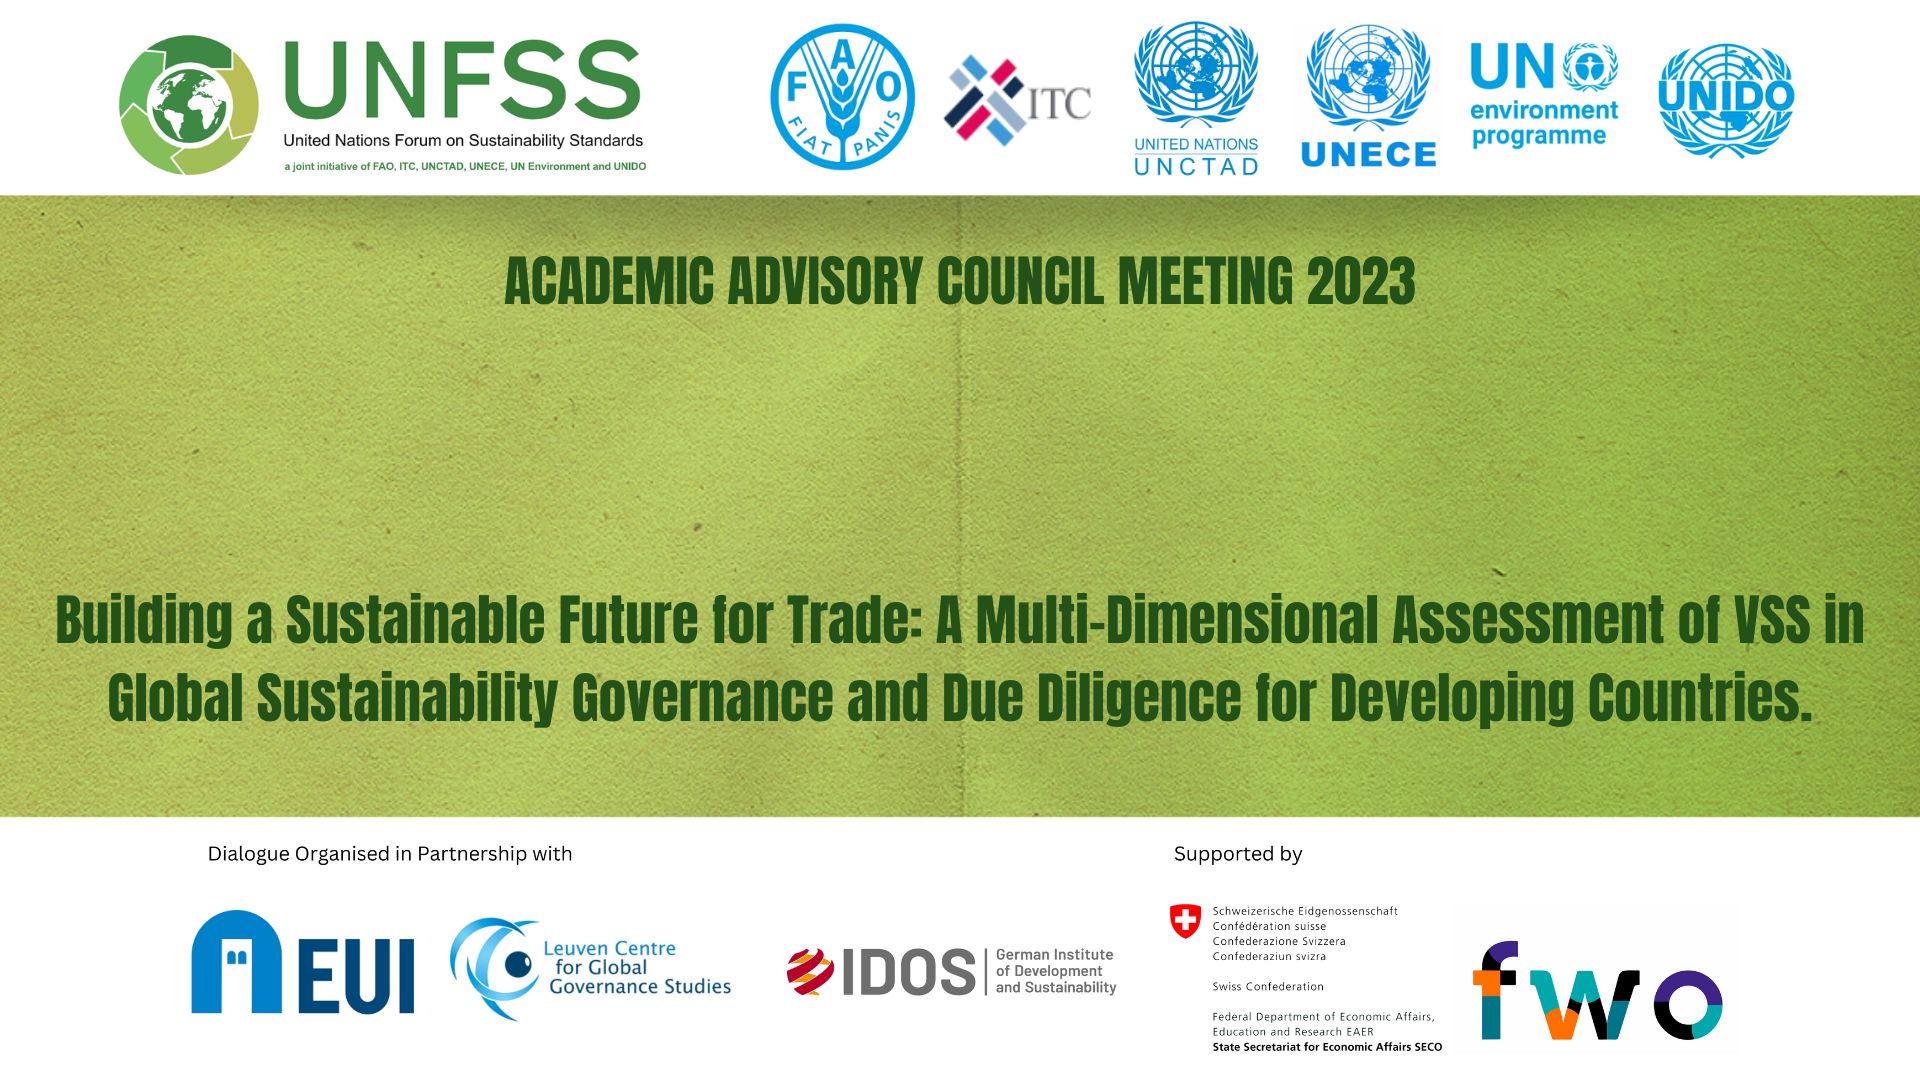 UNFSS Academic Advisory Council Meeting 2023 